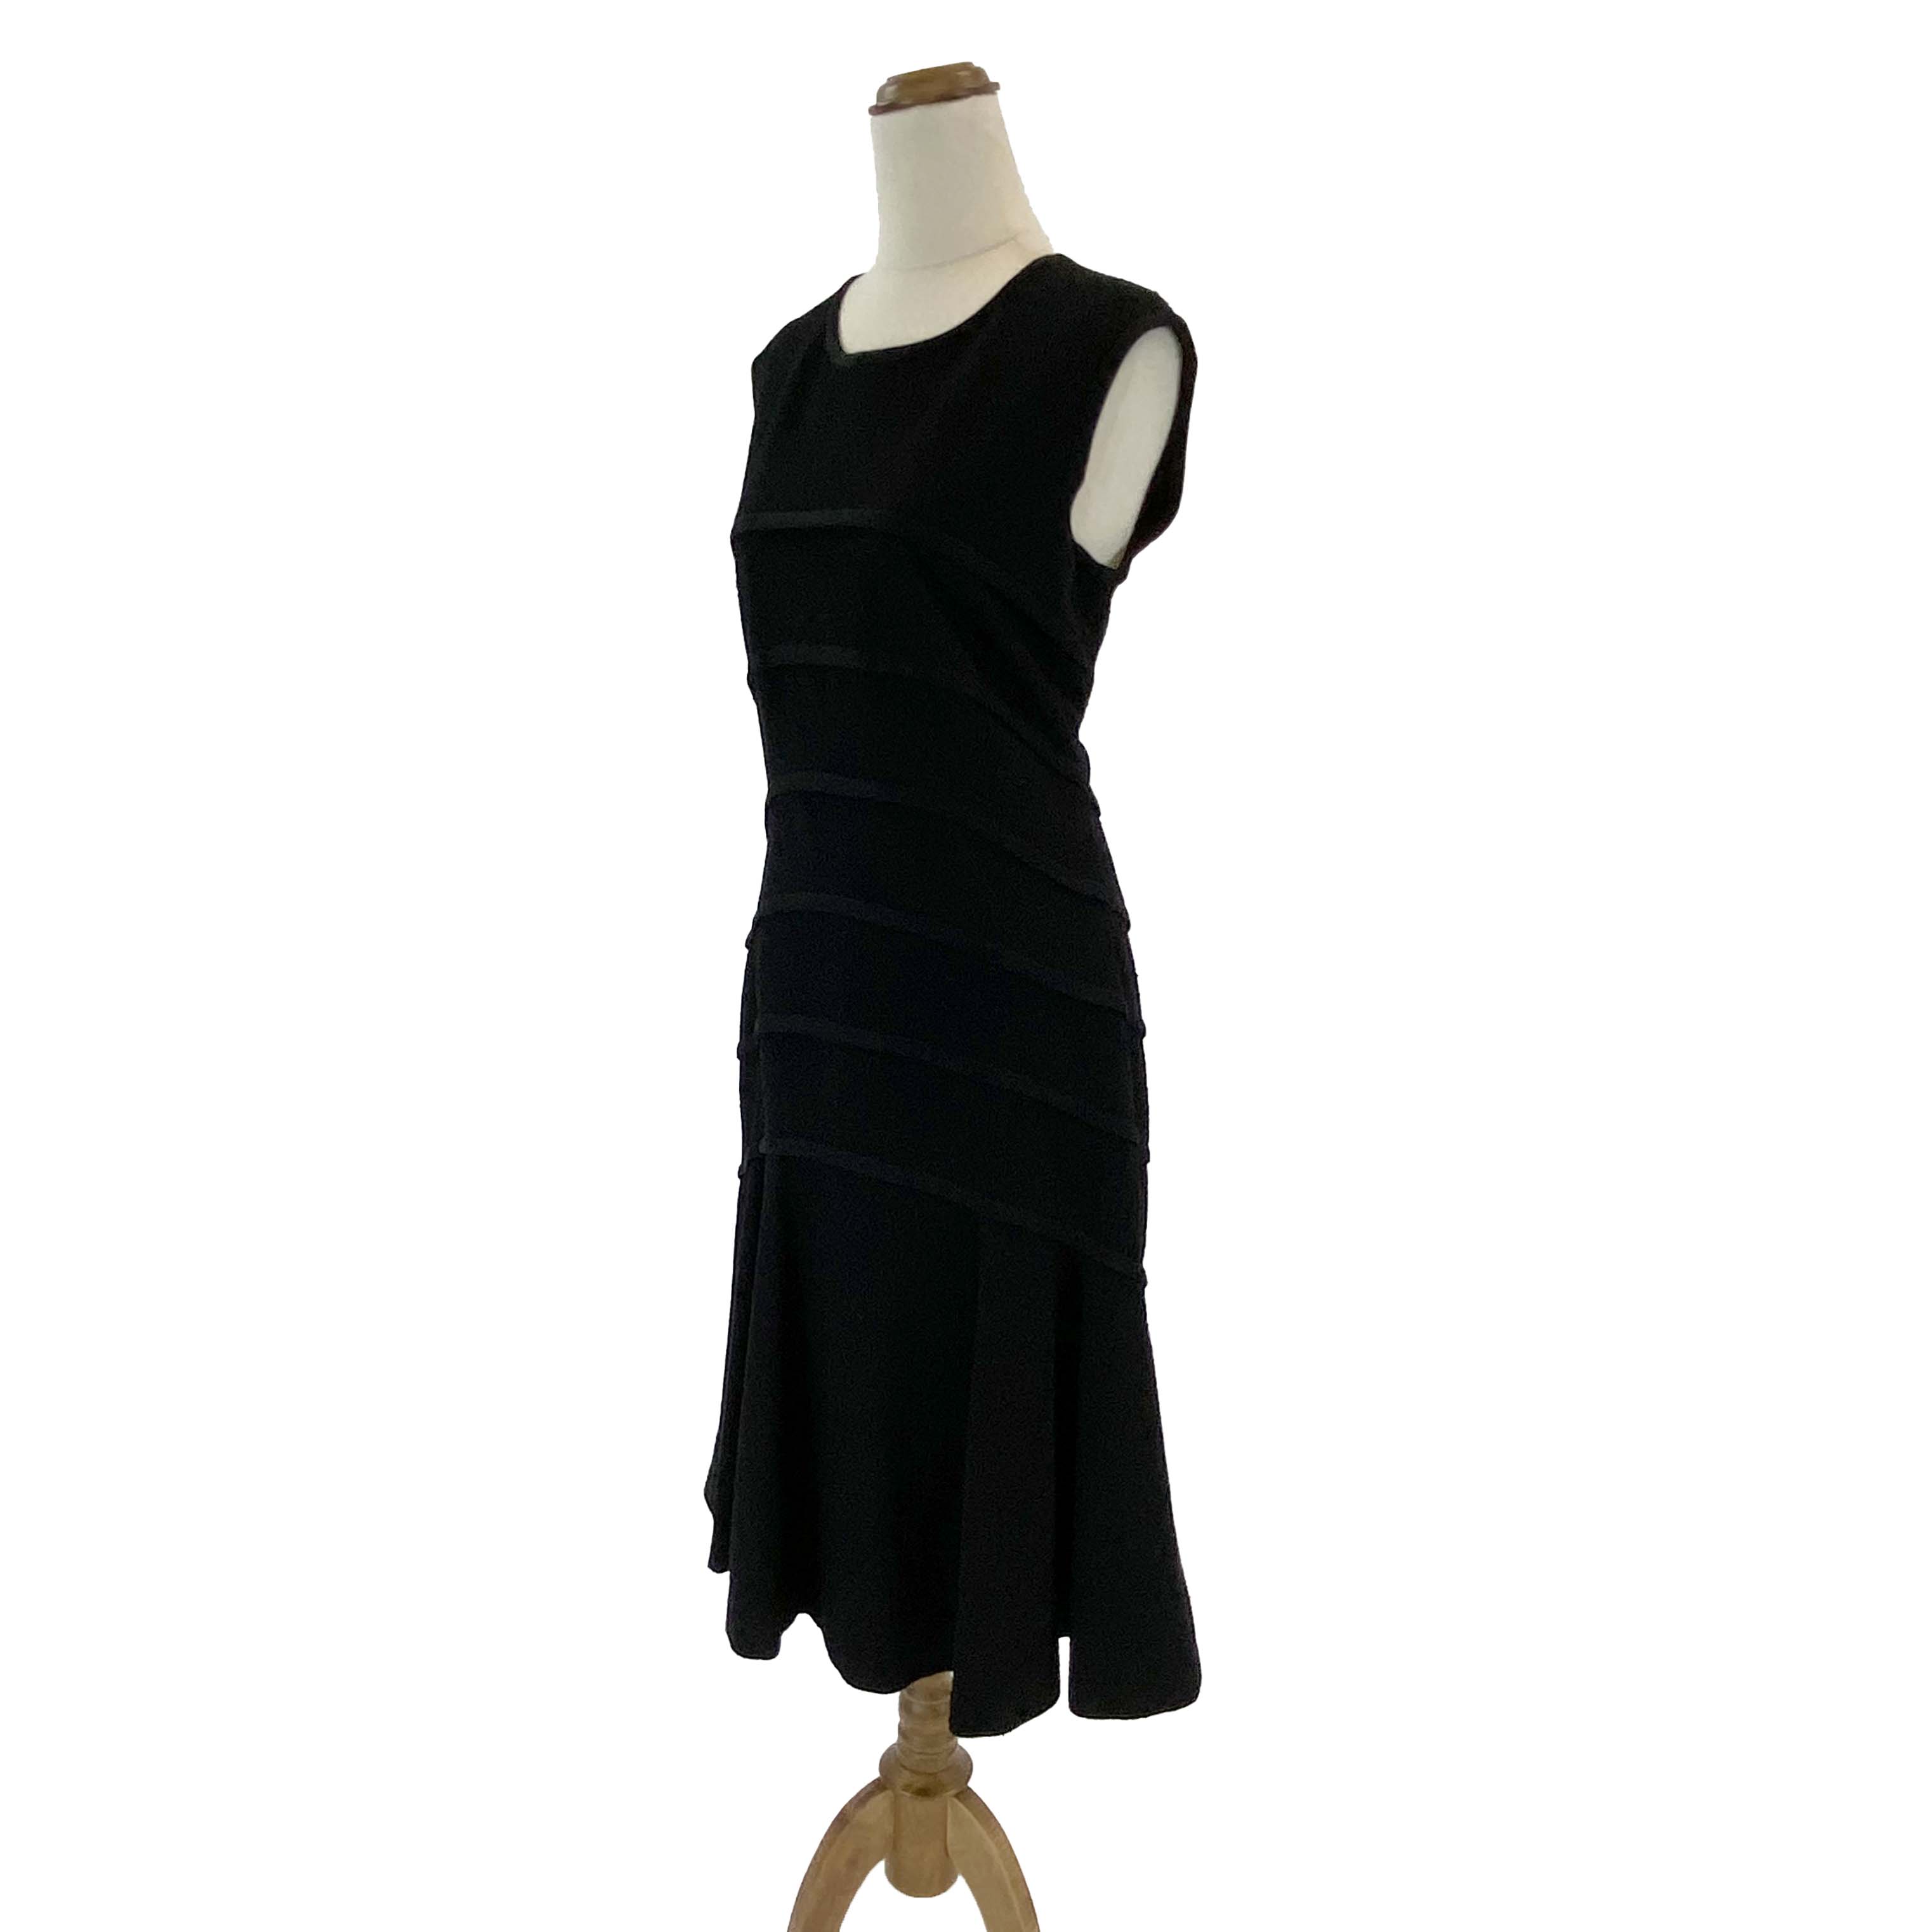 ESCADA Sleeveless Black Dress 